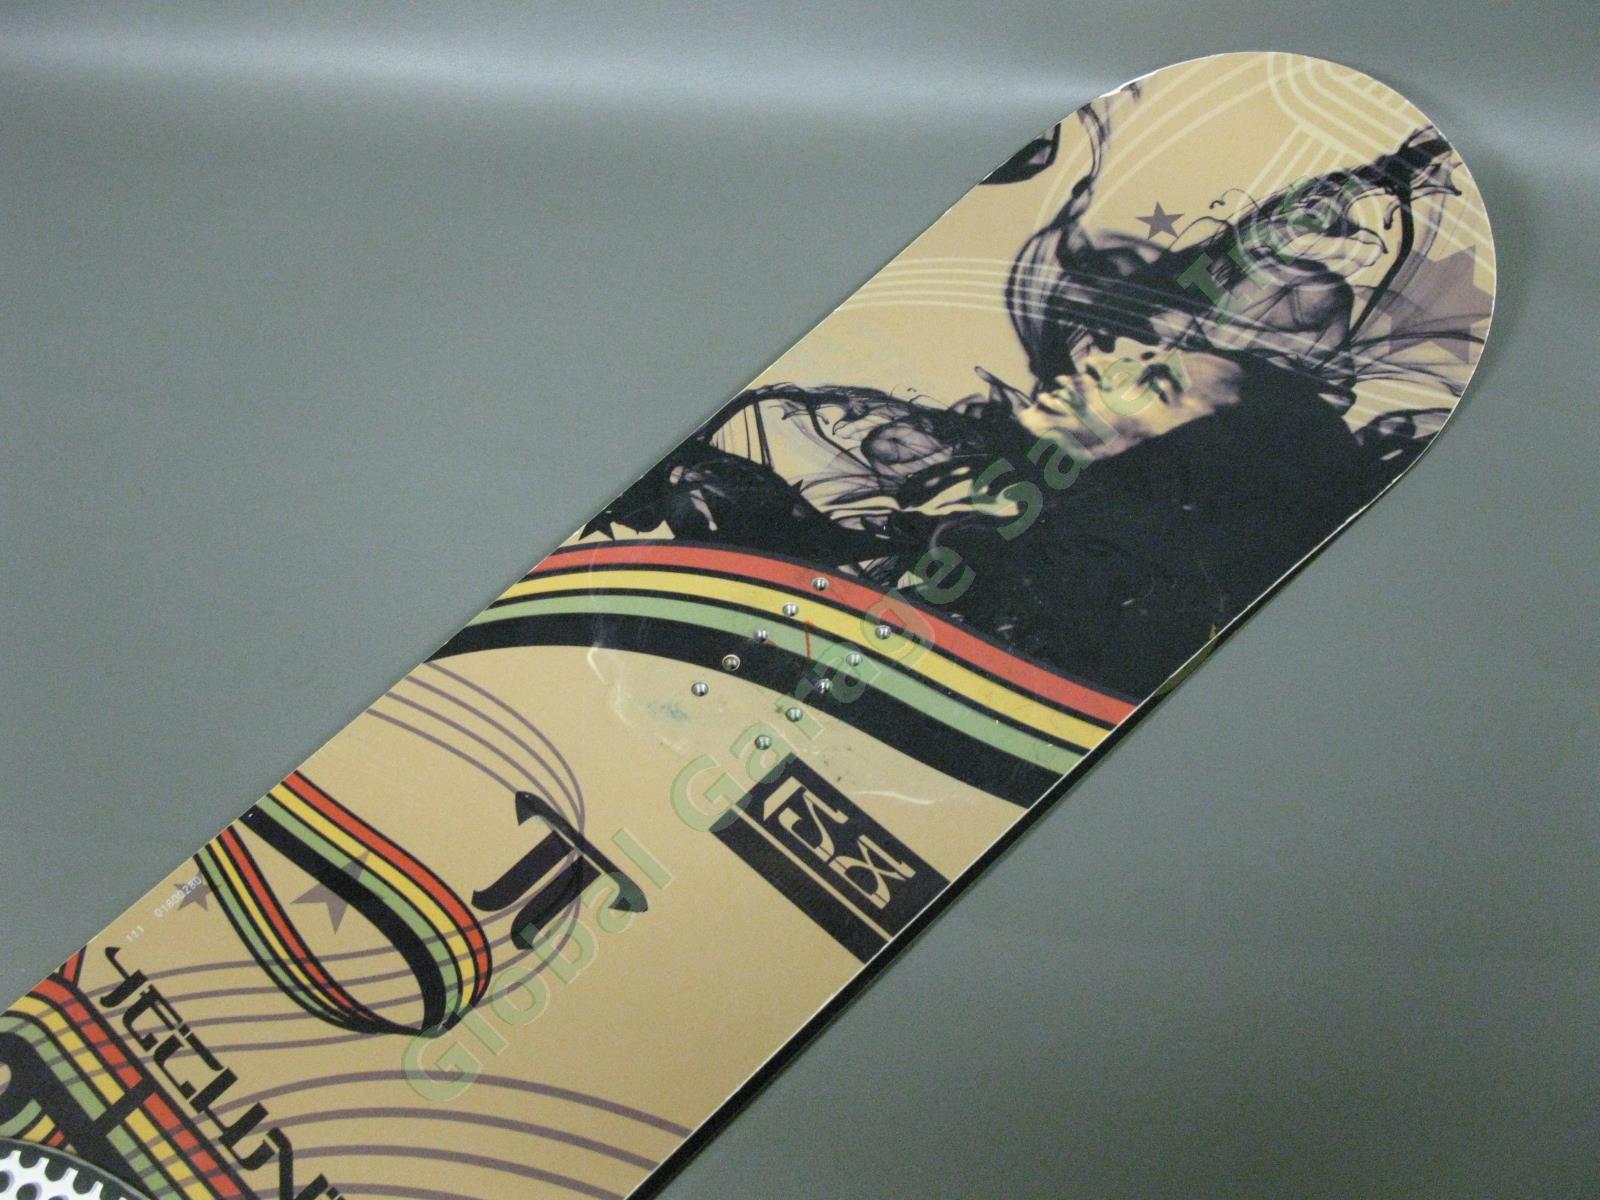 Technine Bob Marley Peter Tosh 158cm Snowboard Reggae Rasta Jamaican Austria 1